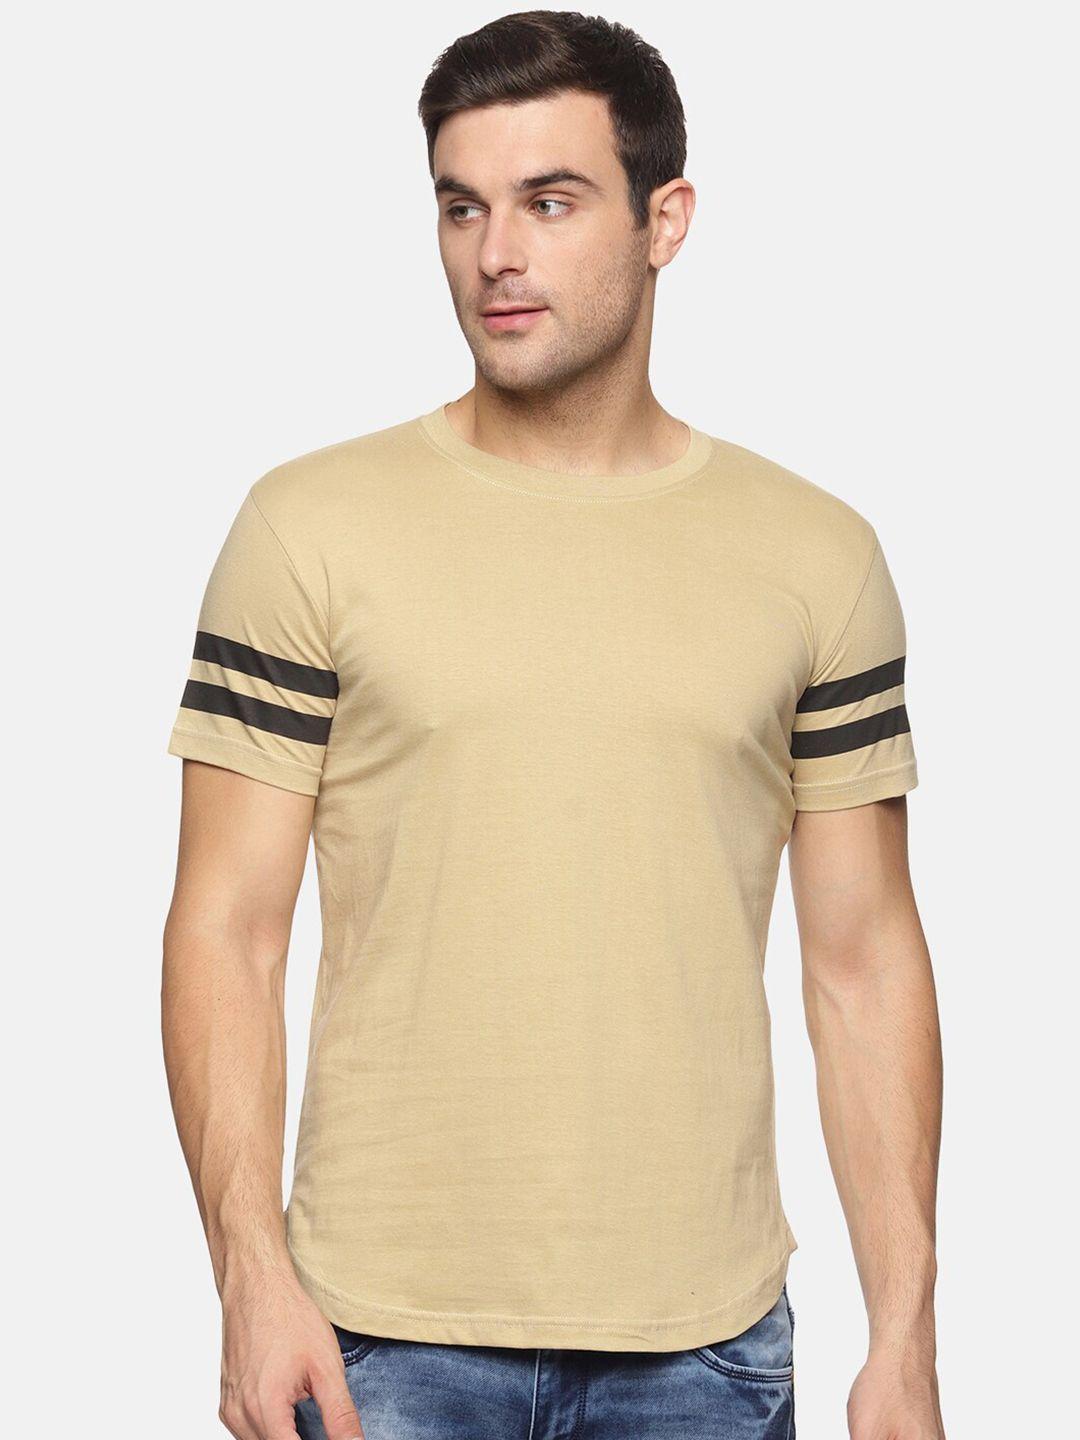 trends tower men beige solid cotton t-shirt